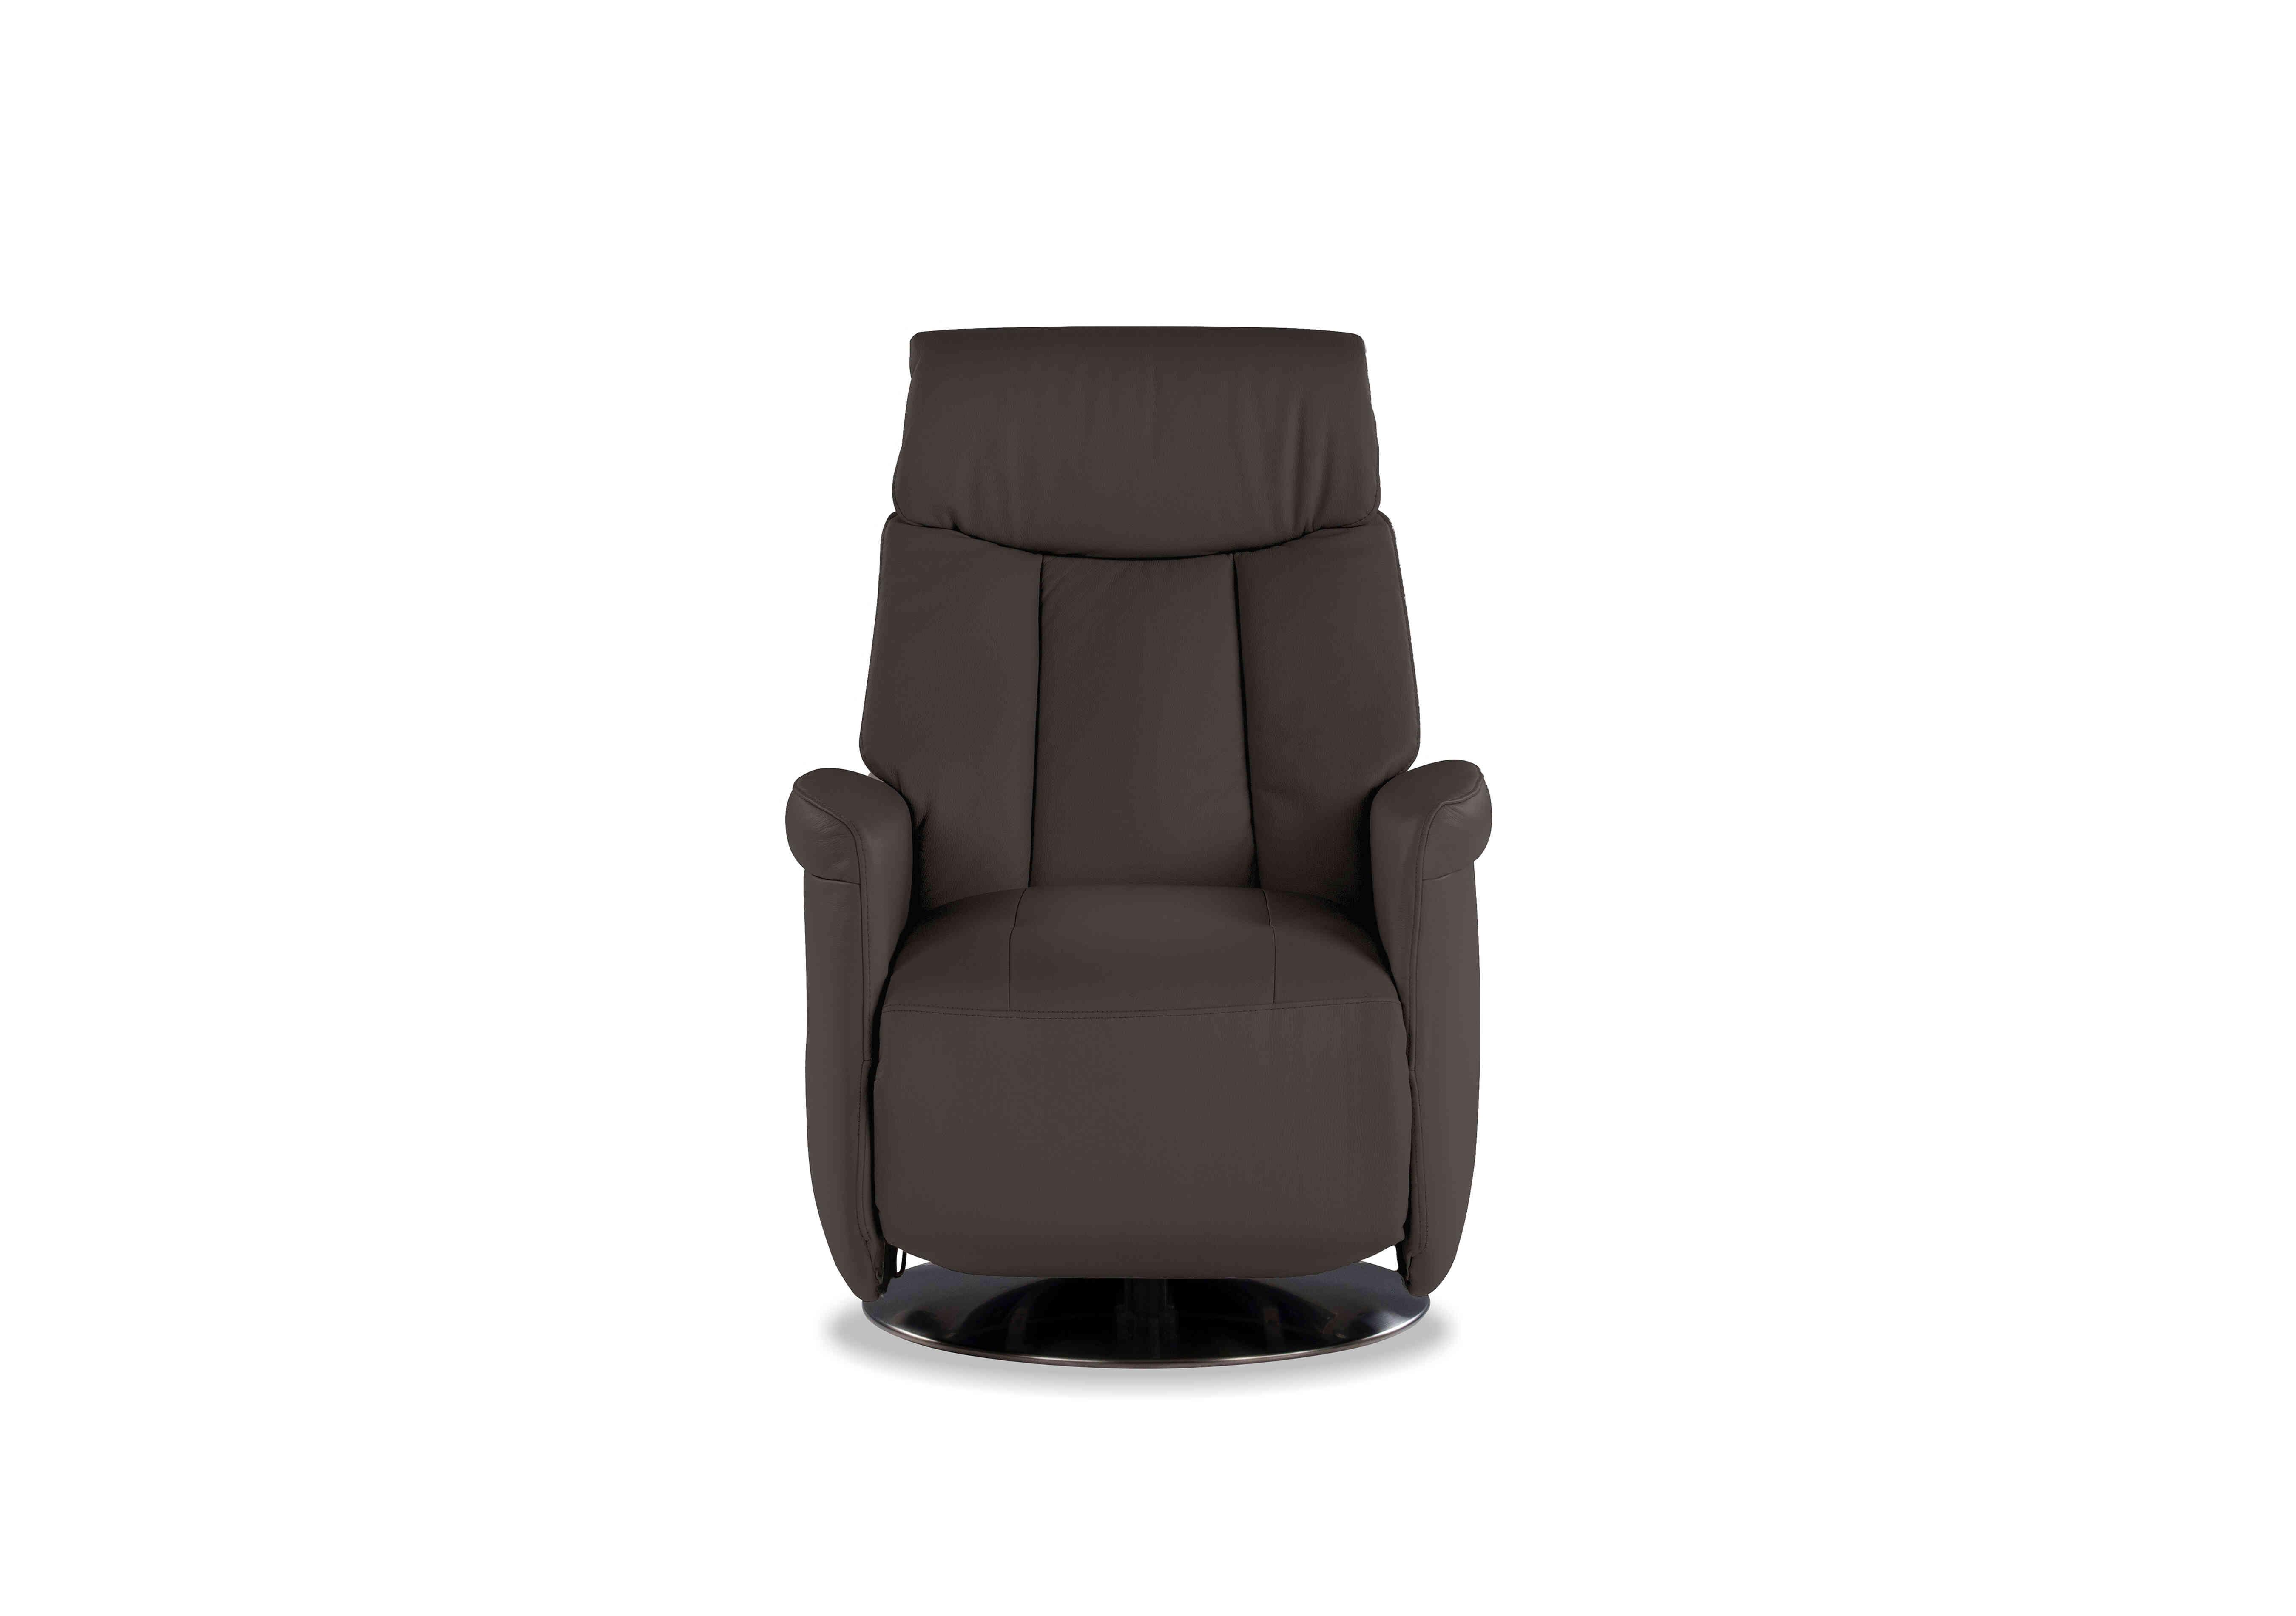 Tricolour Carlo Leather Swivel Power Recliner Chair in Torello 327 Grigio Scuro An Ft on Furniture Village